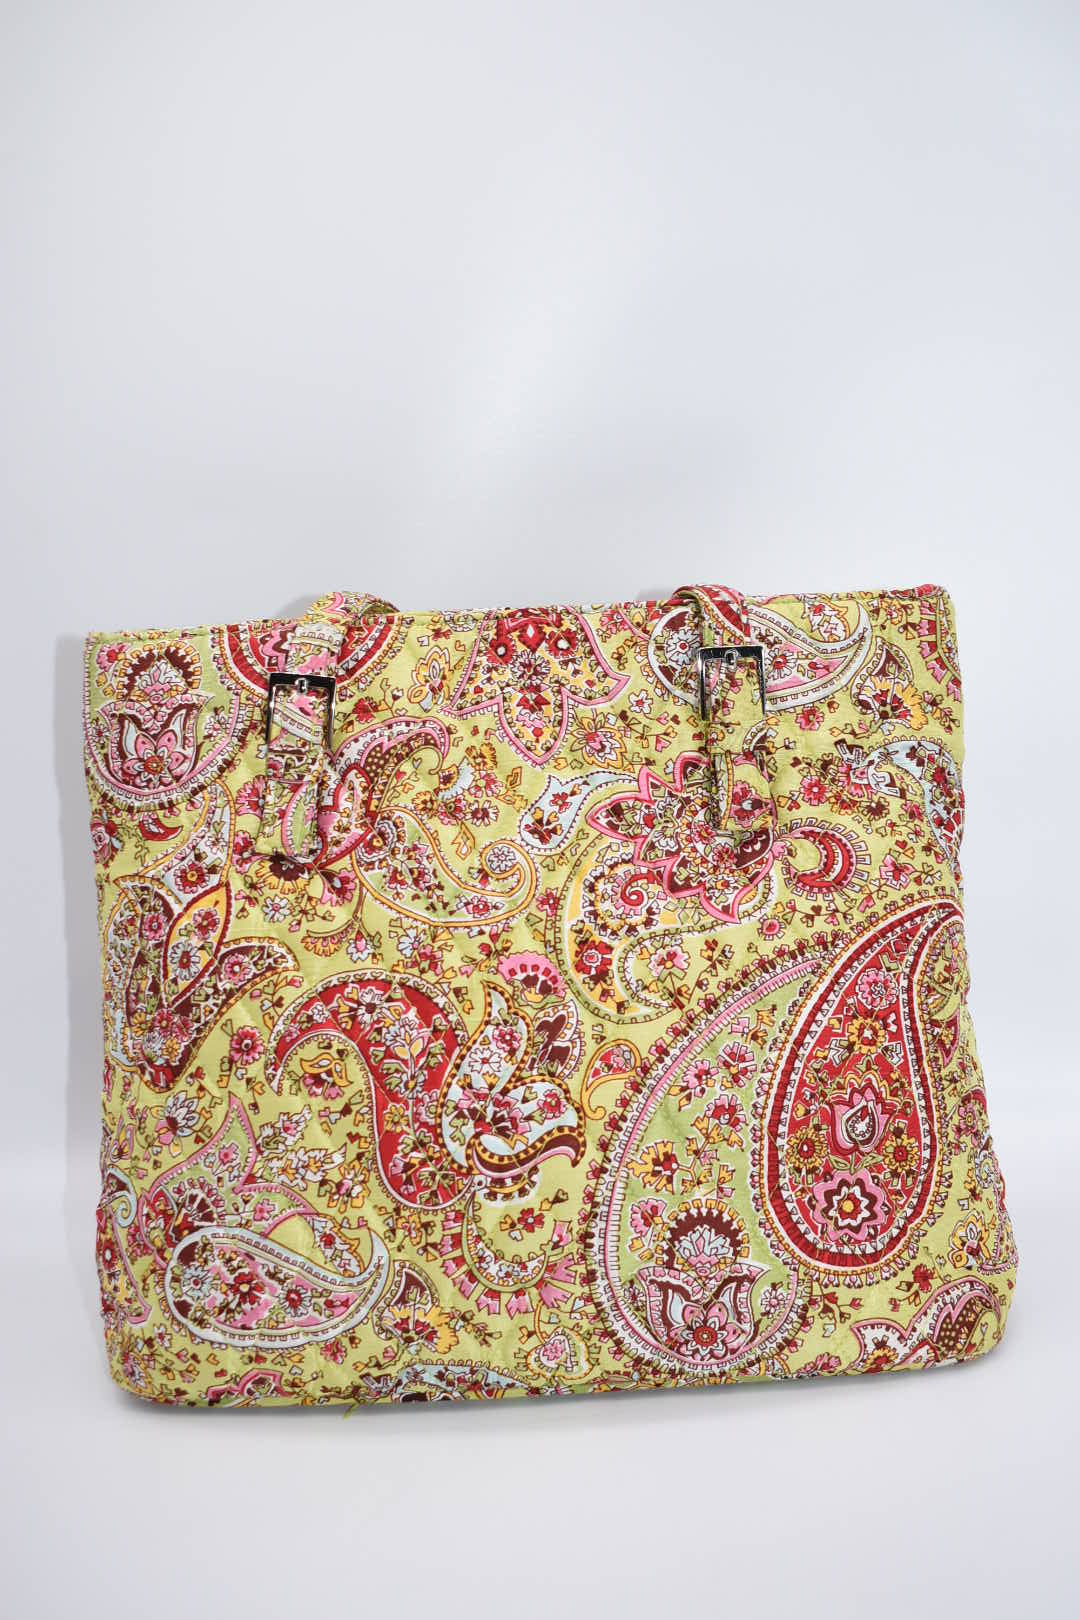 Vera Bradley Limited Edition Silk Tote Bag in "Pistachio Paisley"